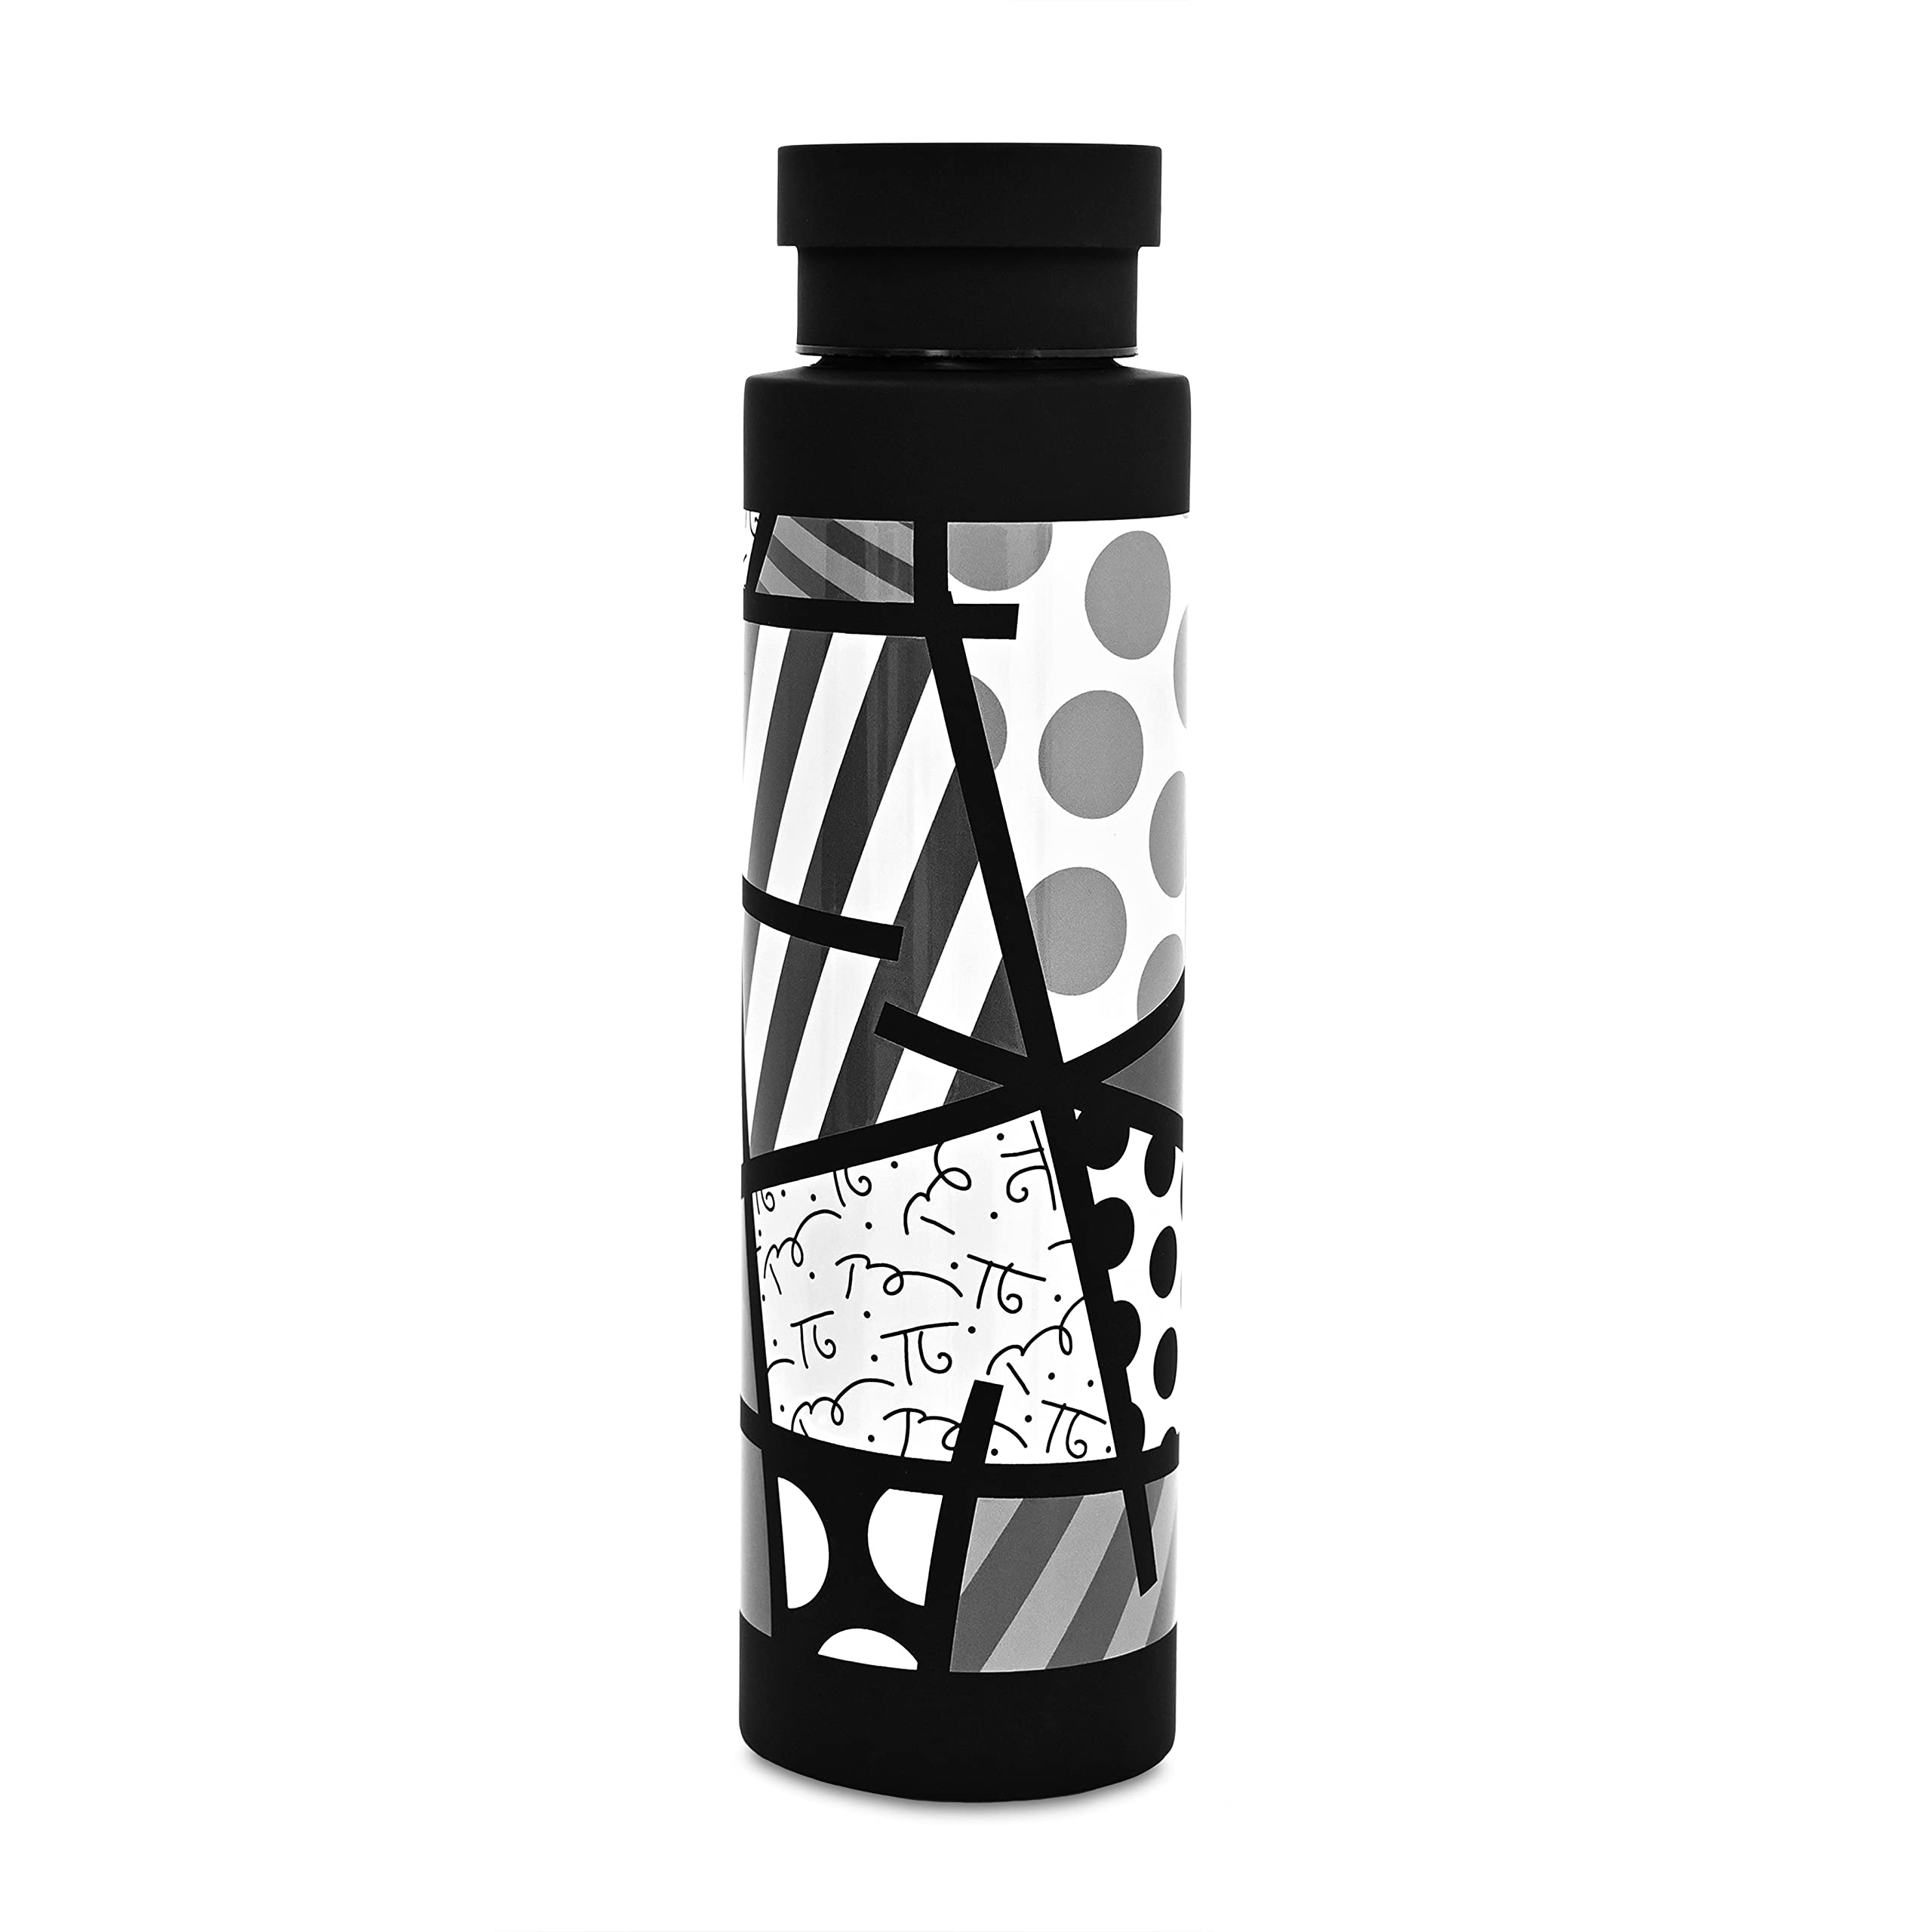 BRITTO Romero 25oz Insulated Water Bottle, Stainless Steel, Black Landscape - Black'